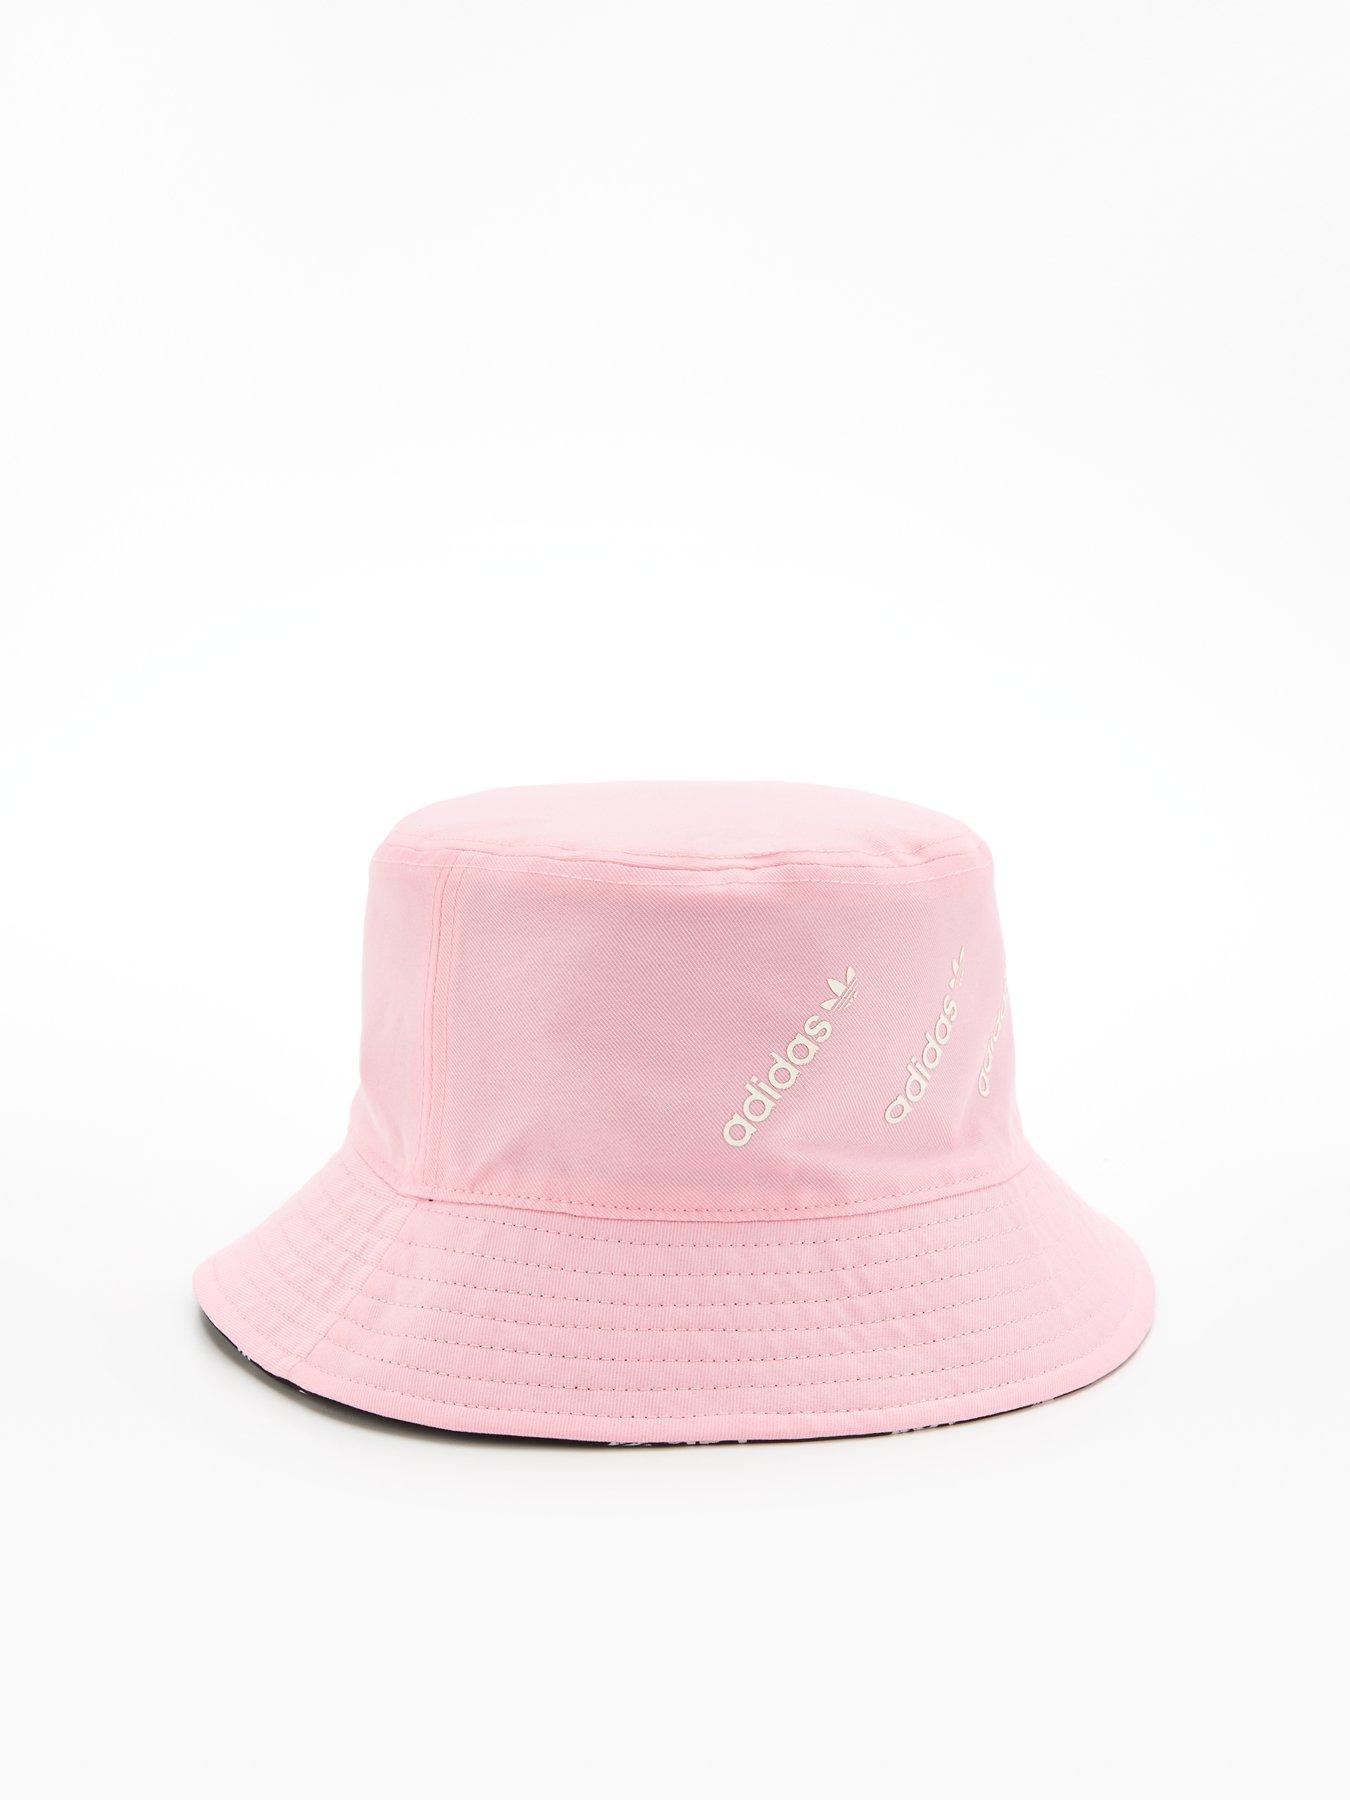 adidas Originals Logomania Reversible Bucket Hat - Black/Pink | very.co.uk